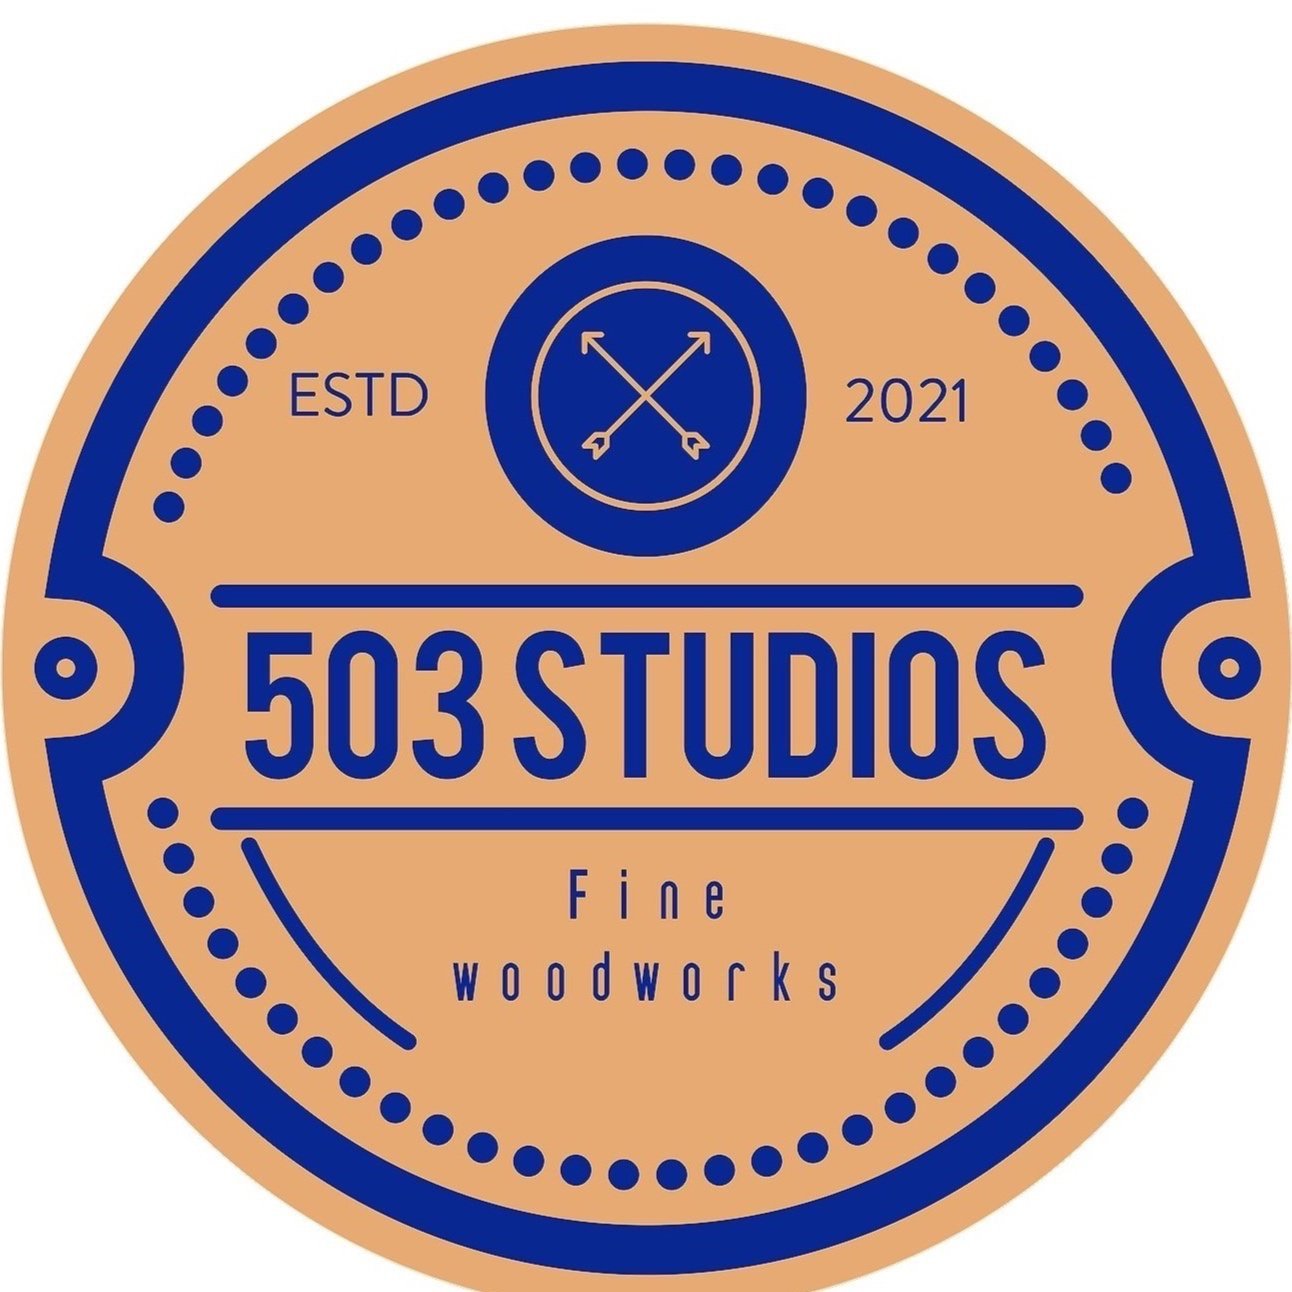 503 Studios